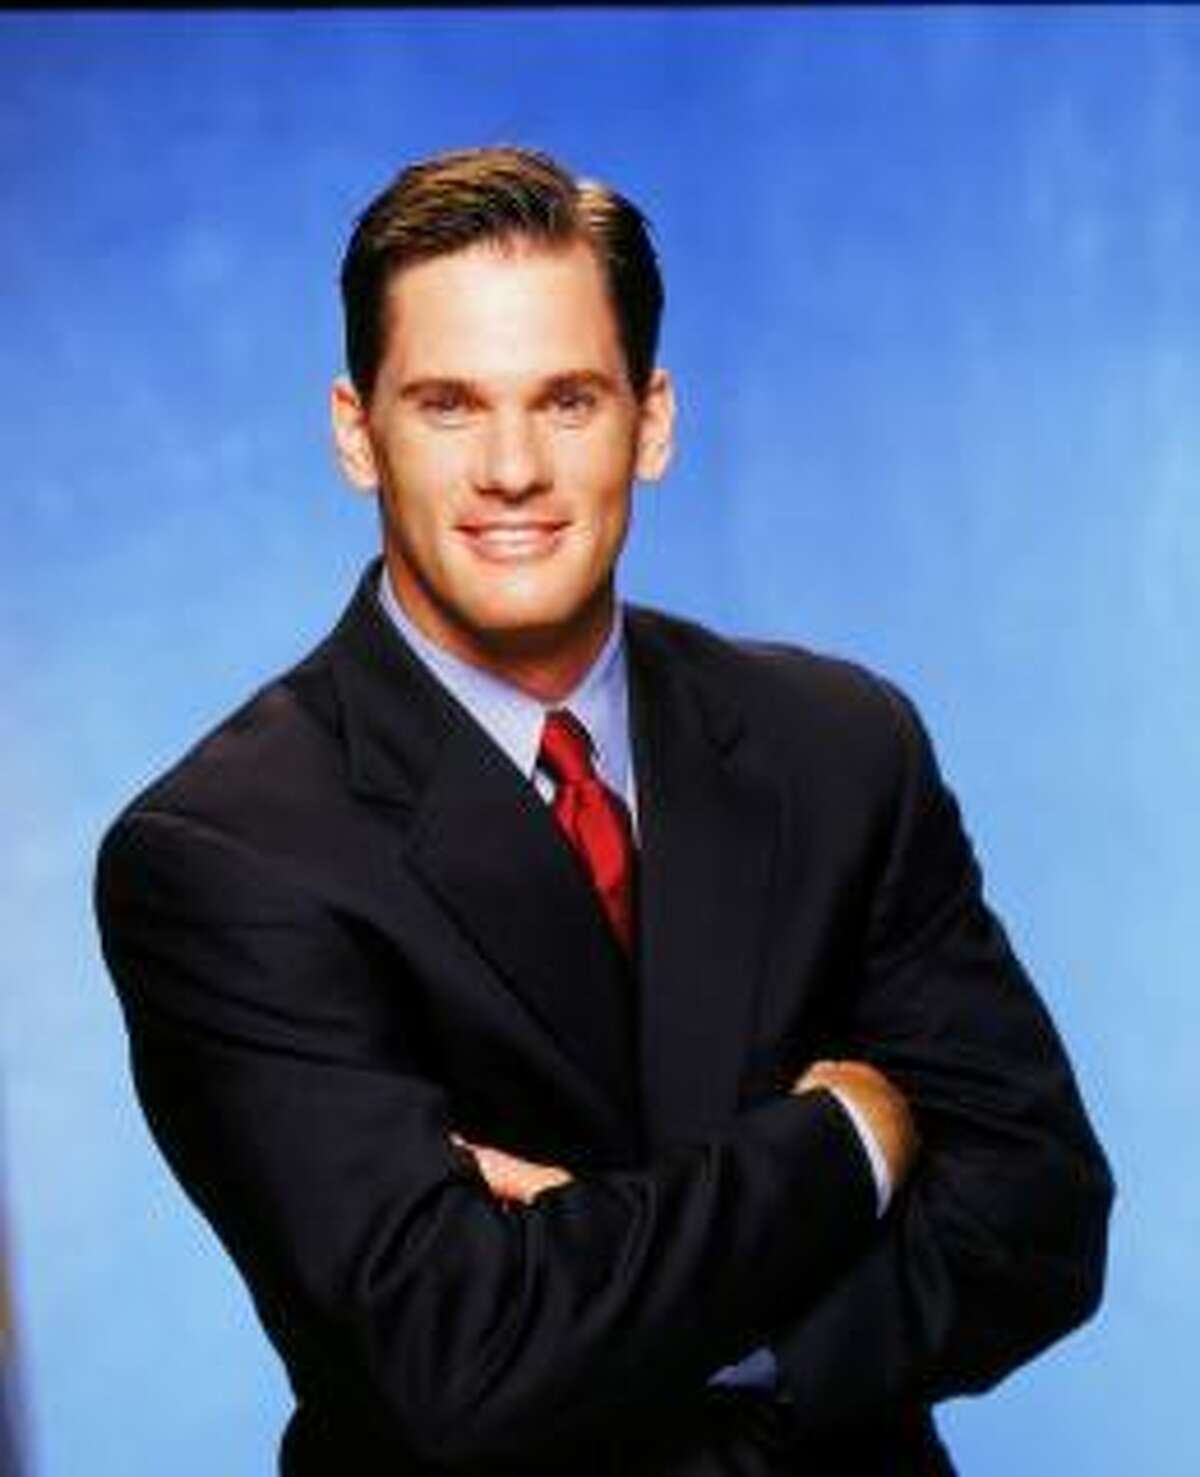 ExNews 8 anchor Ted Koppy takes job as financial adviser